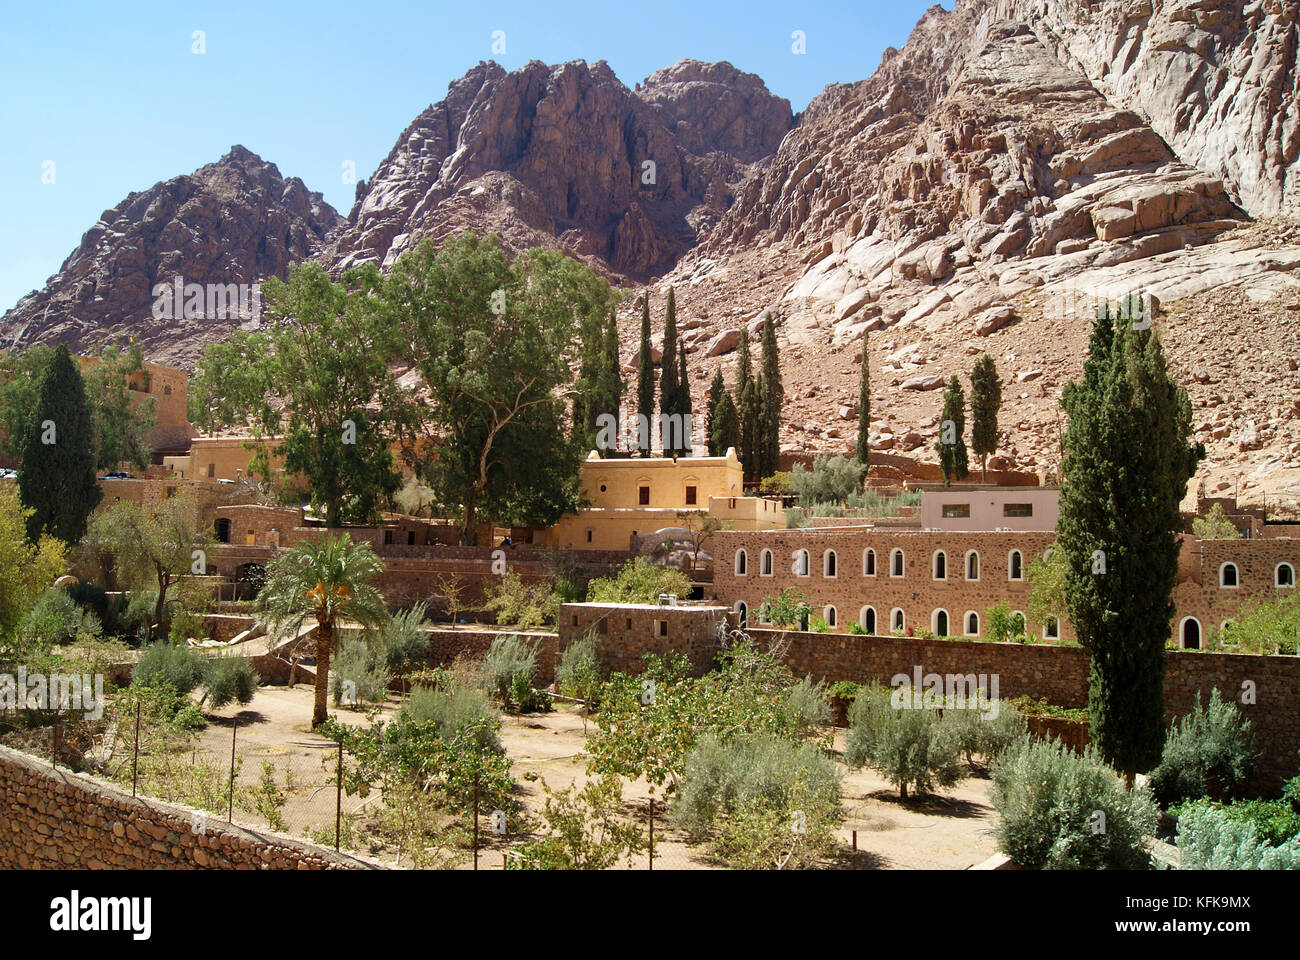 Garden of Saint Catherine's Monastery in the desert on the Sinai Peninsula, Egypt - one of the oldest working Christian monasteries in the world - aga Stock Photo